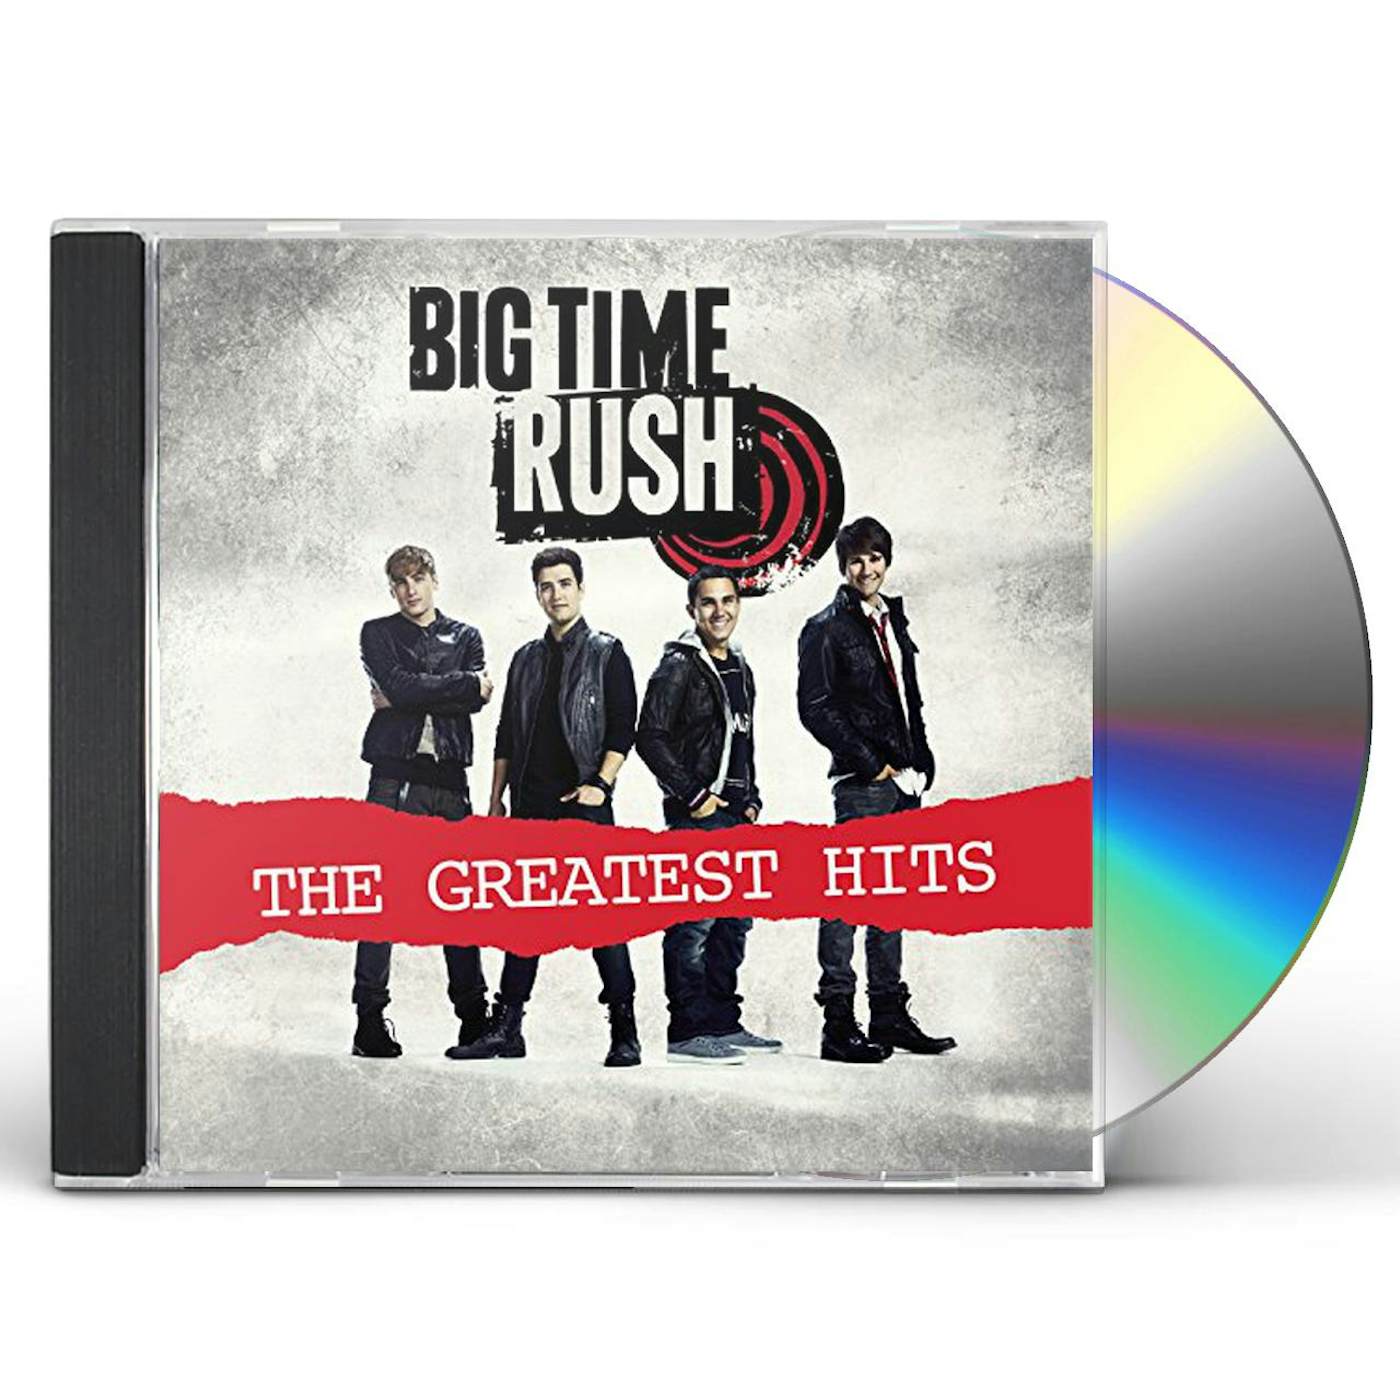 Big Time Rush Pop Band T-Shirt Ideal Gift Tour 2023 Fans Men Women